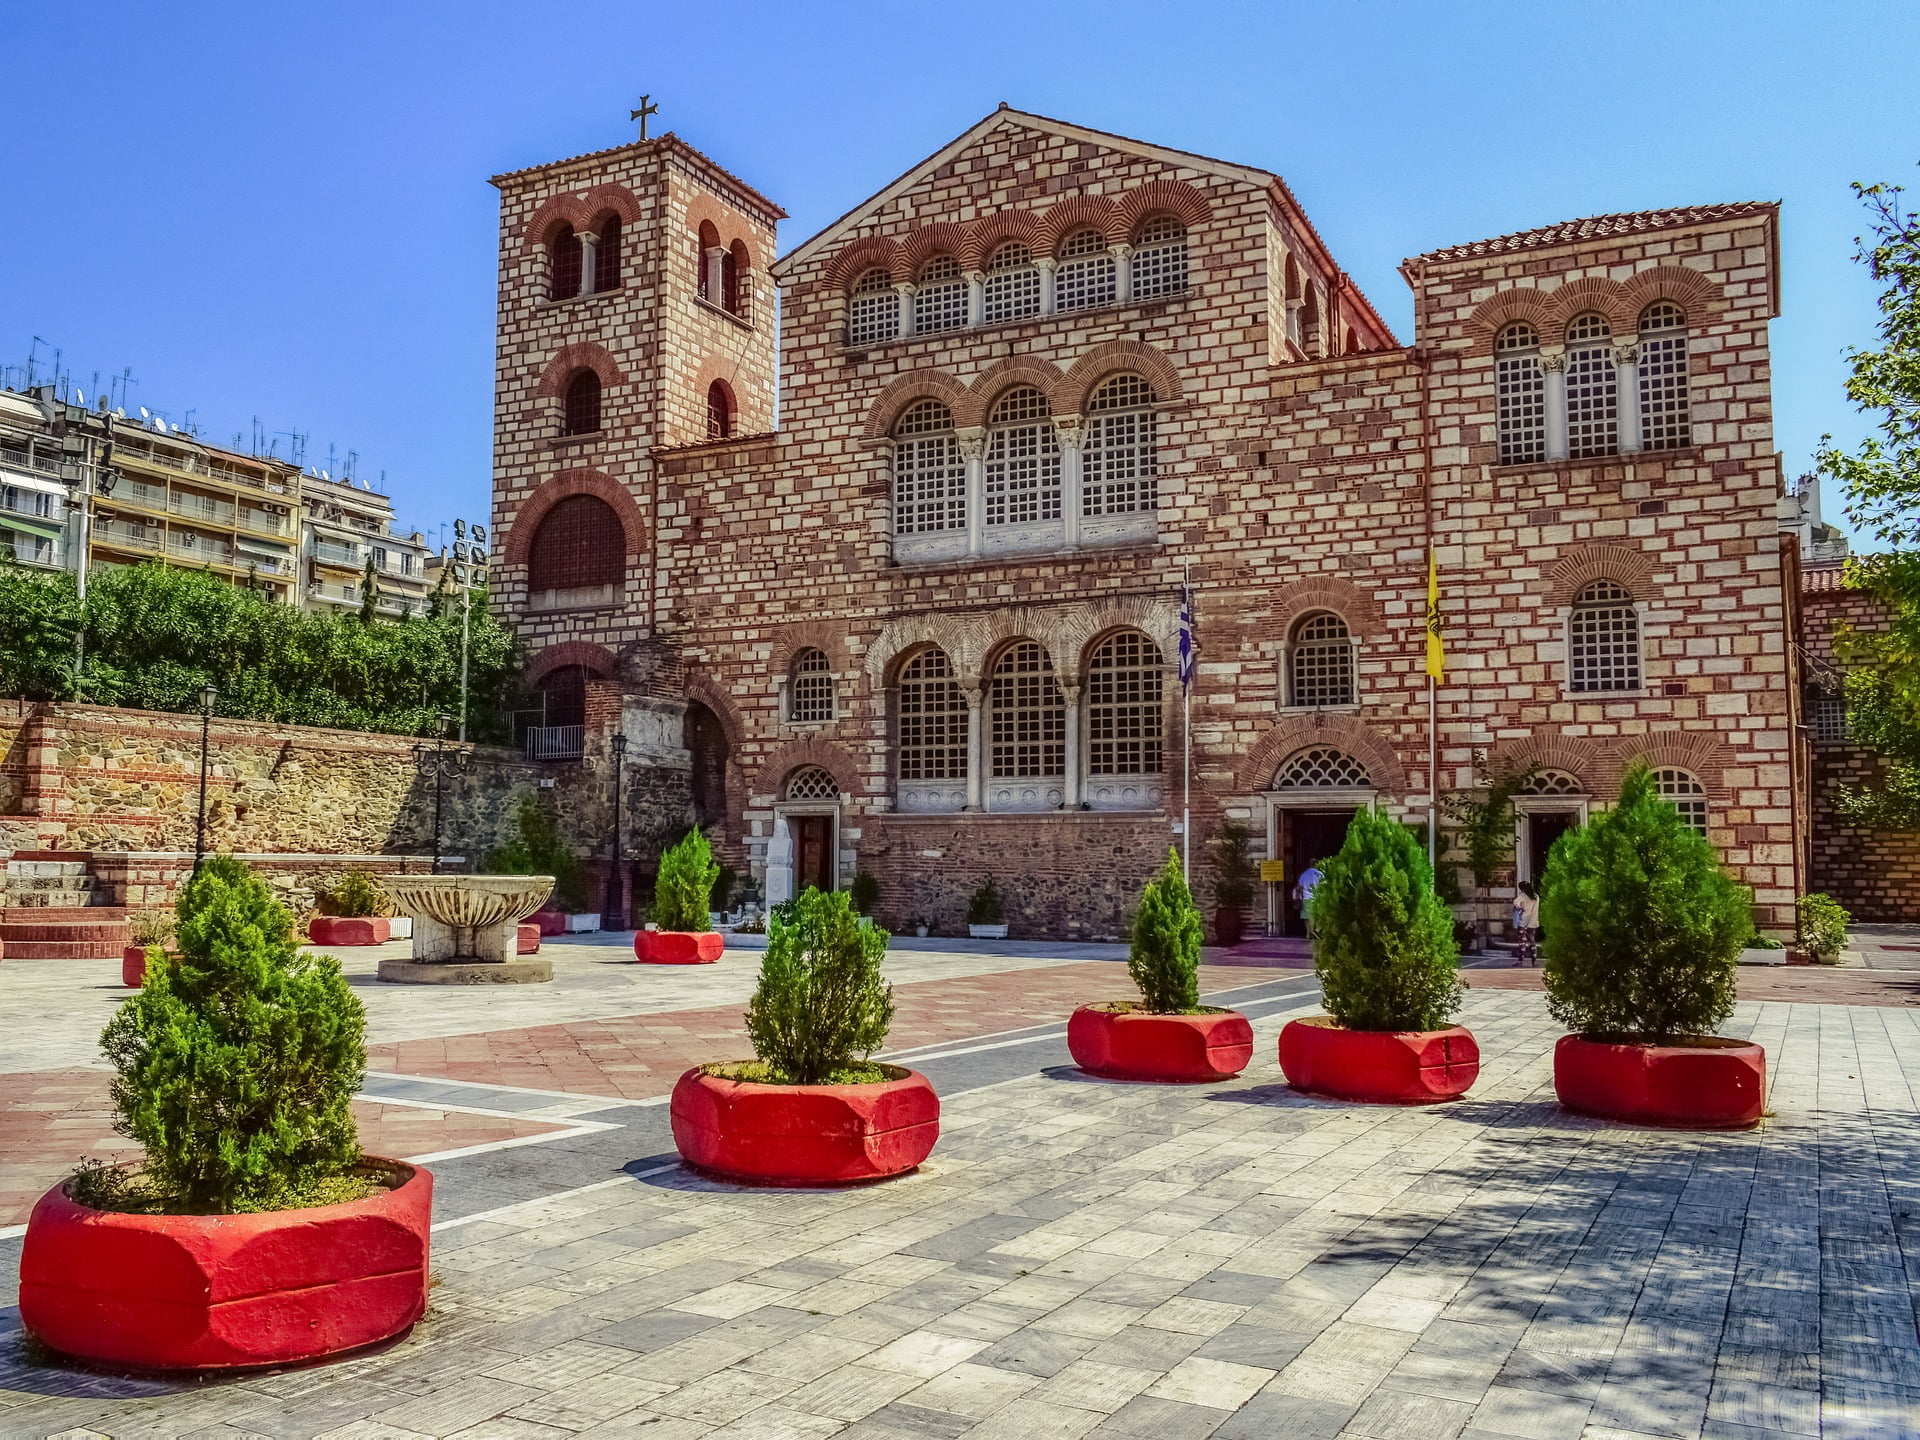 Agios Dimitrios Church in Thessaloniki